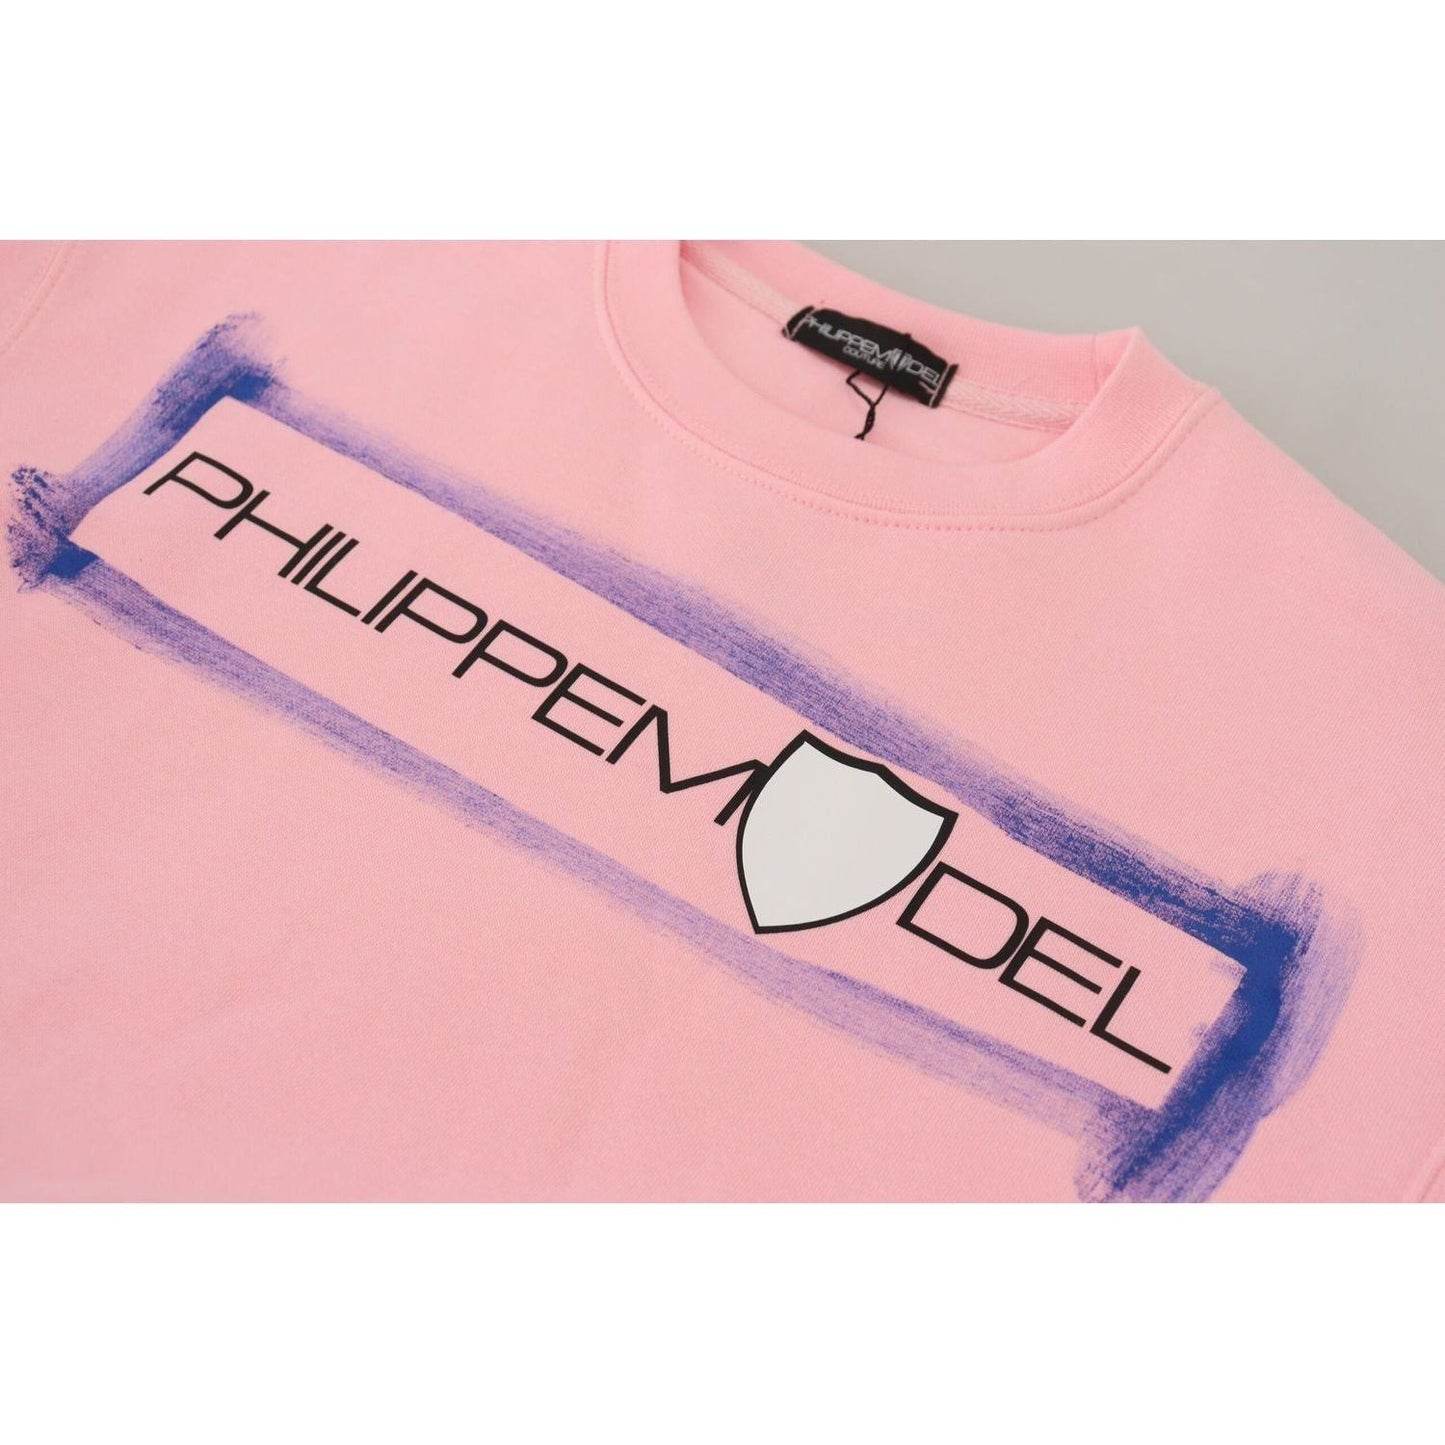 Philippe Model Elegant Pink Long Sleeve Pullover Sweater pink-printed-long-sleeves-pullover-sweater IMG_9294-scaled-f4fe7506-49b.jpg